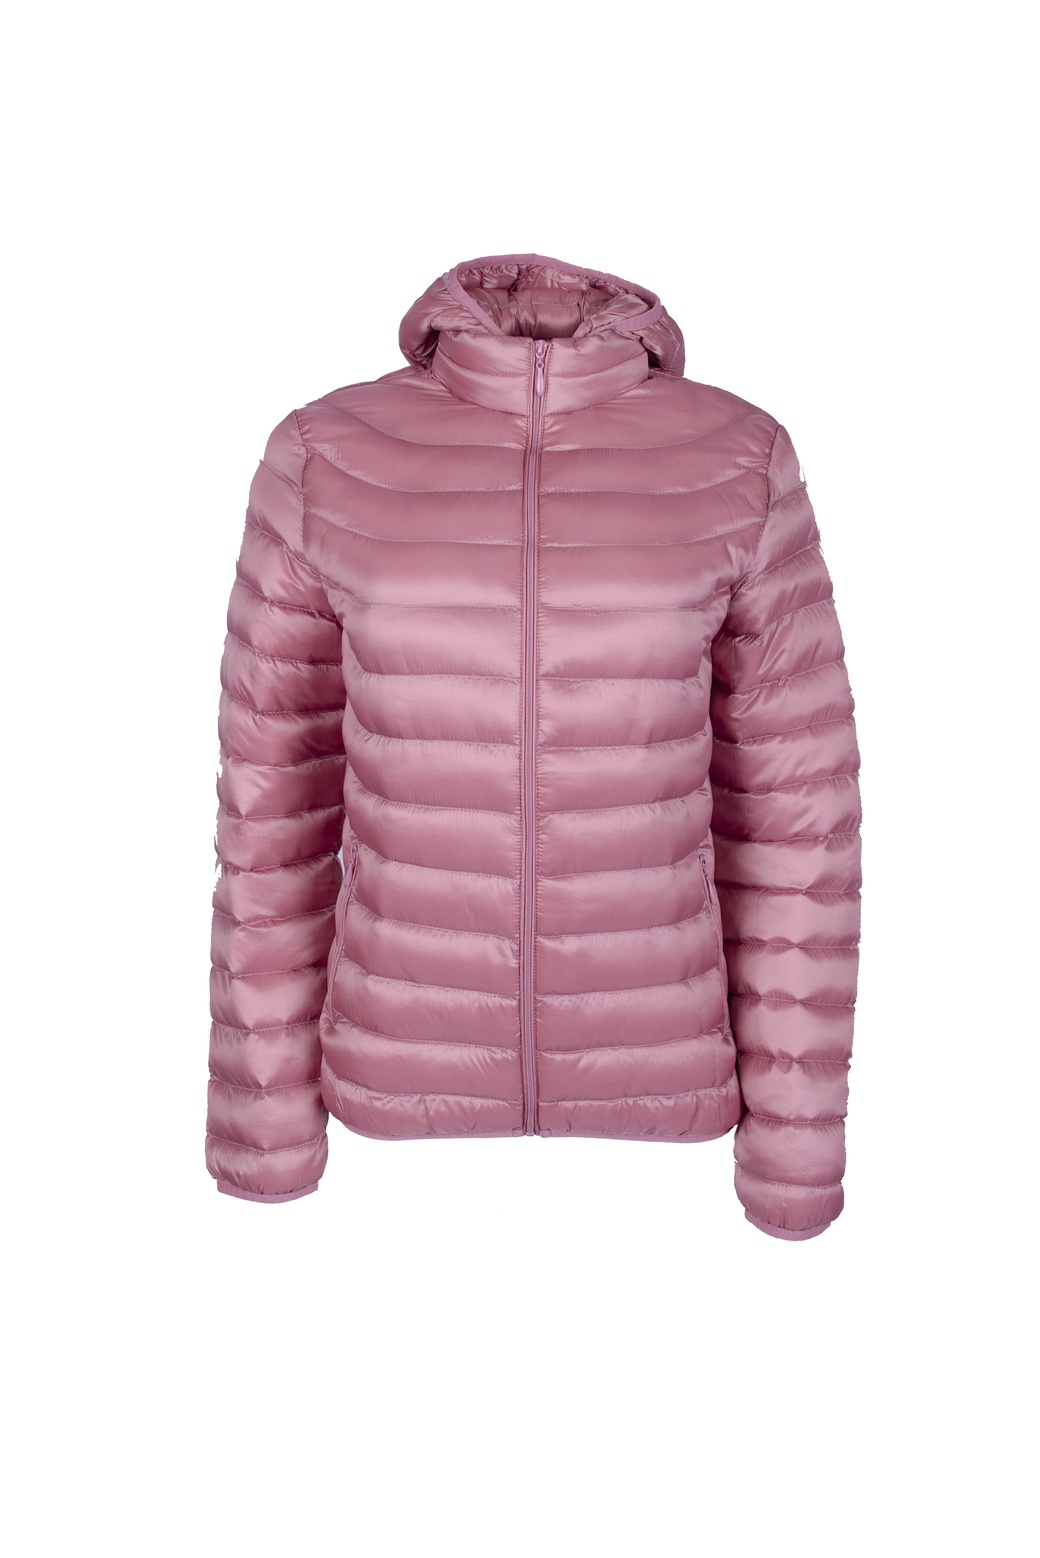 Куртка Scott N.Y.C. carla, жемчужно розовый фото